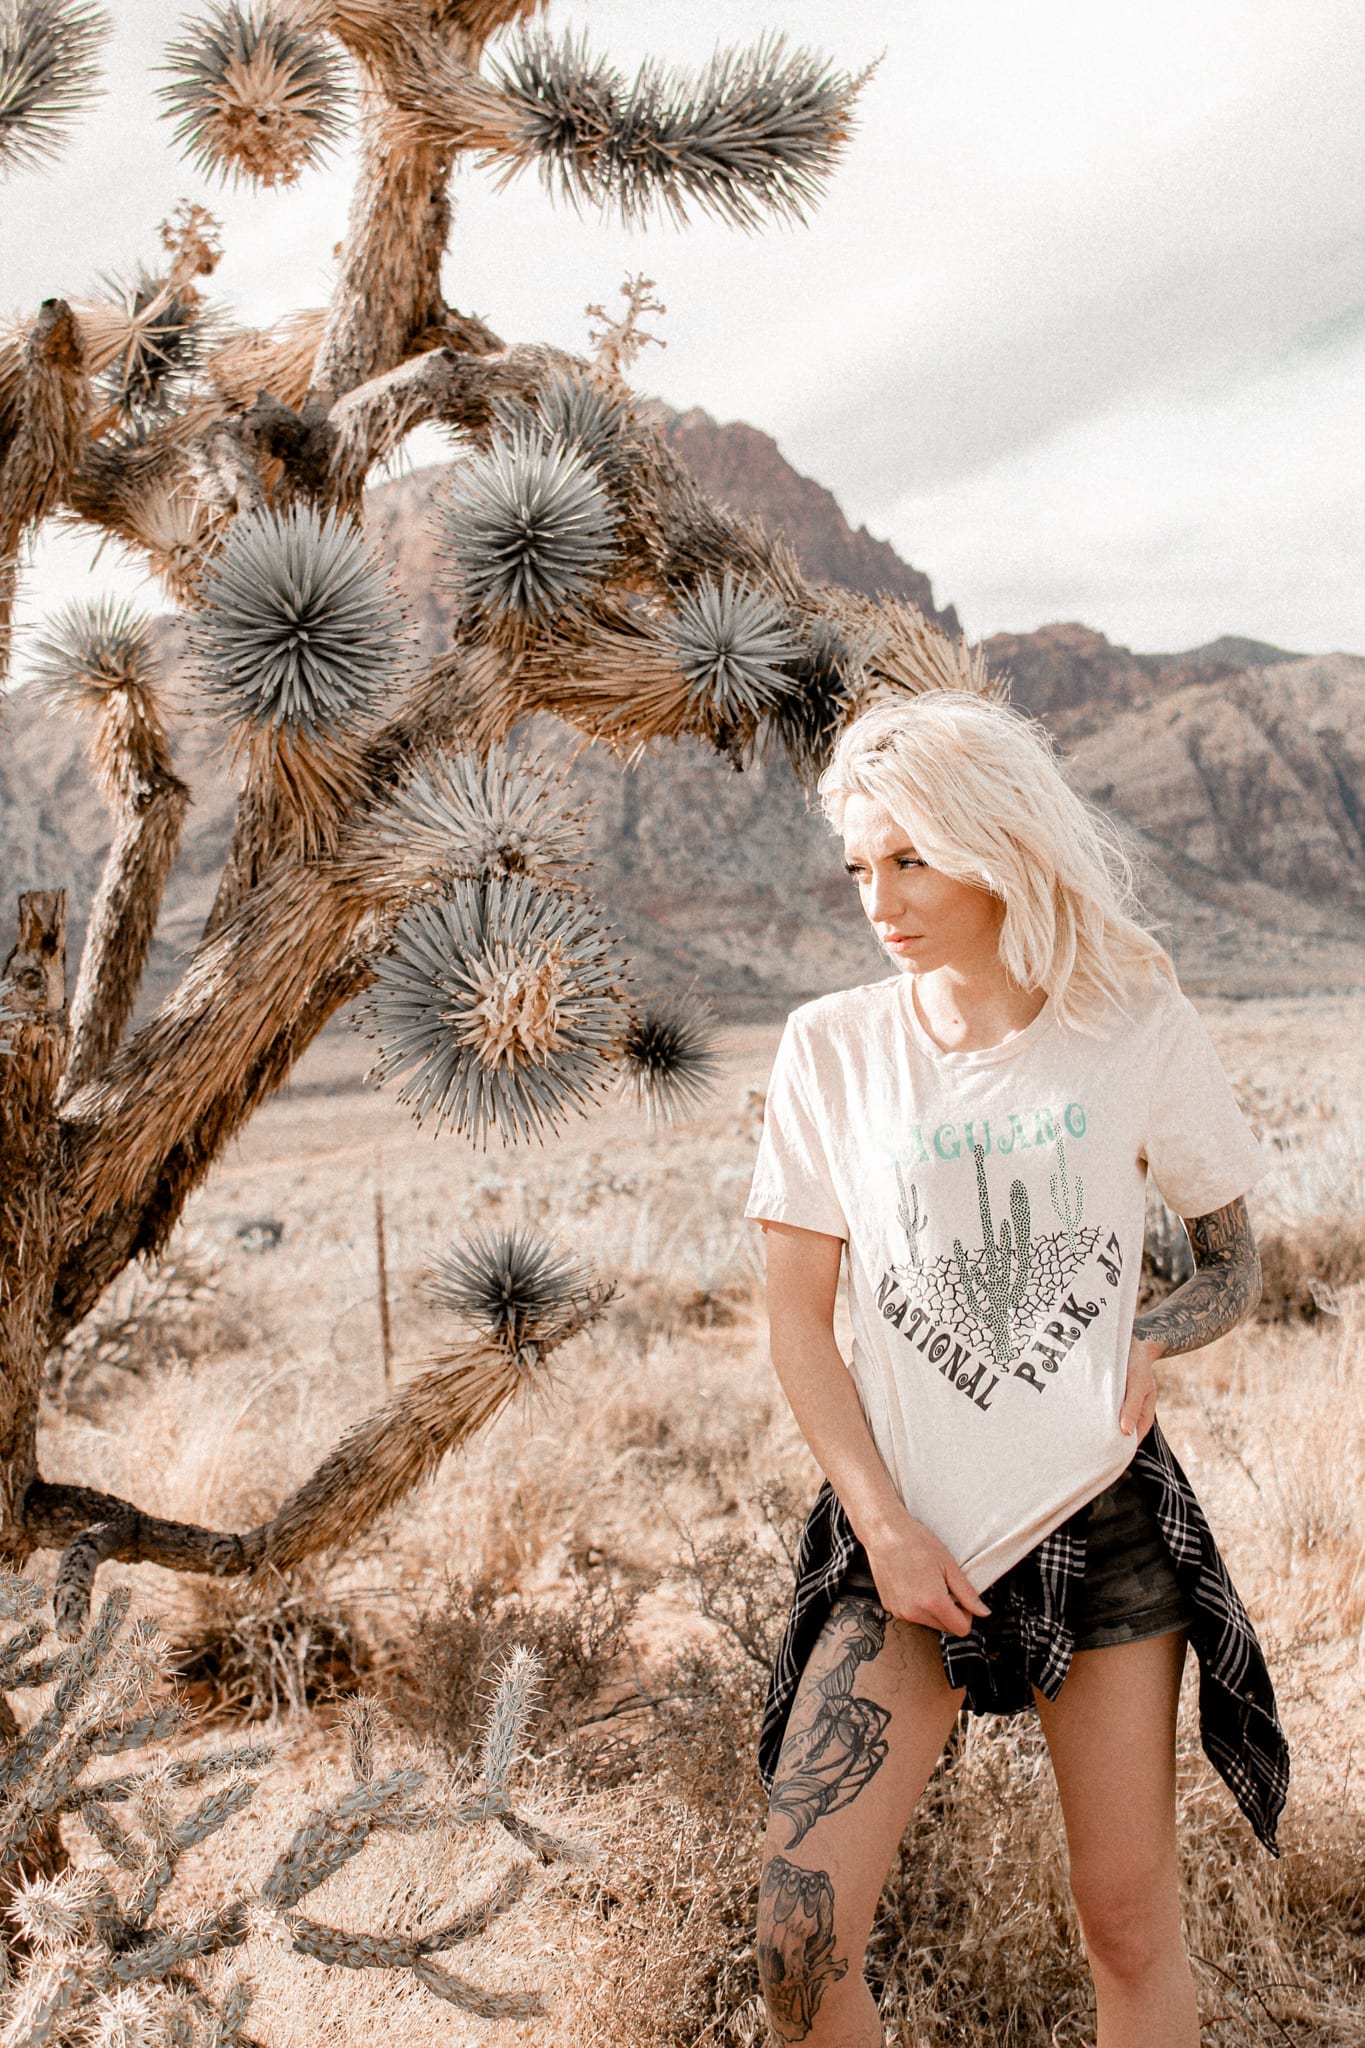 Girl standing next to joshua tree with saguaro national park shirt